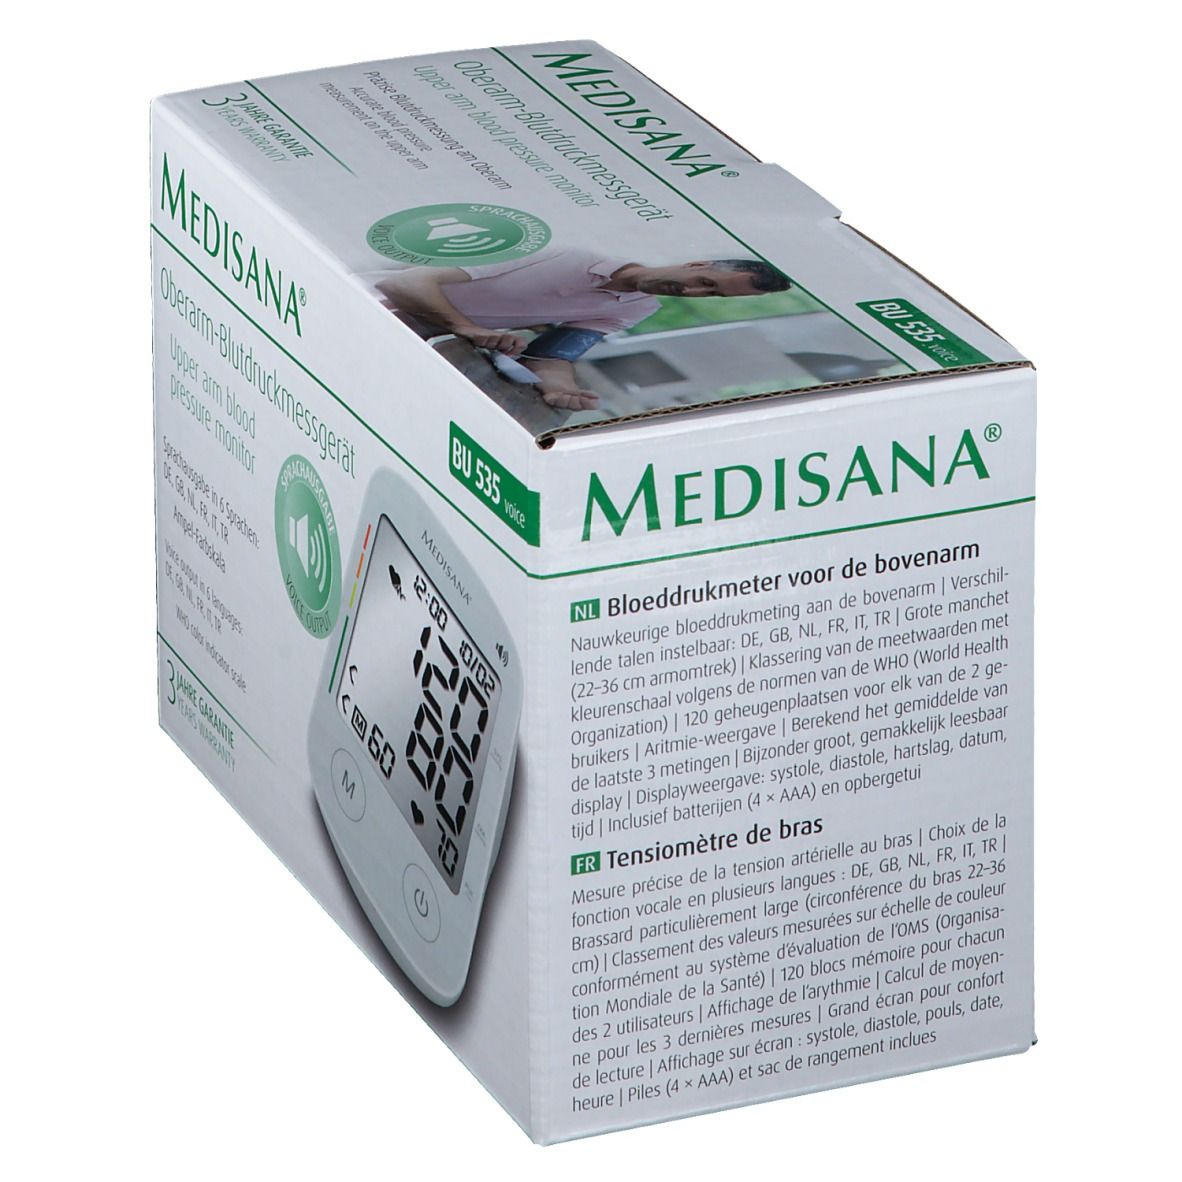 Medisana Bloeddrukmeter Bovenarm Voice BU535